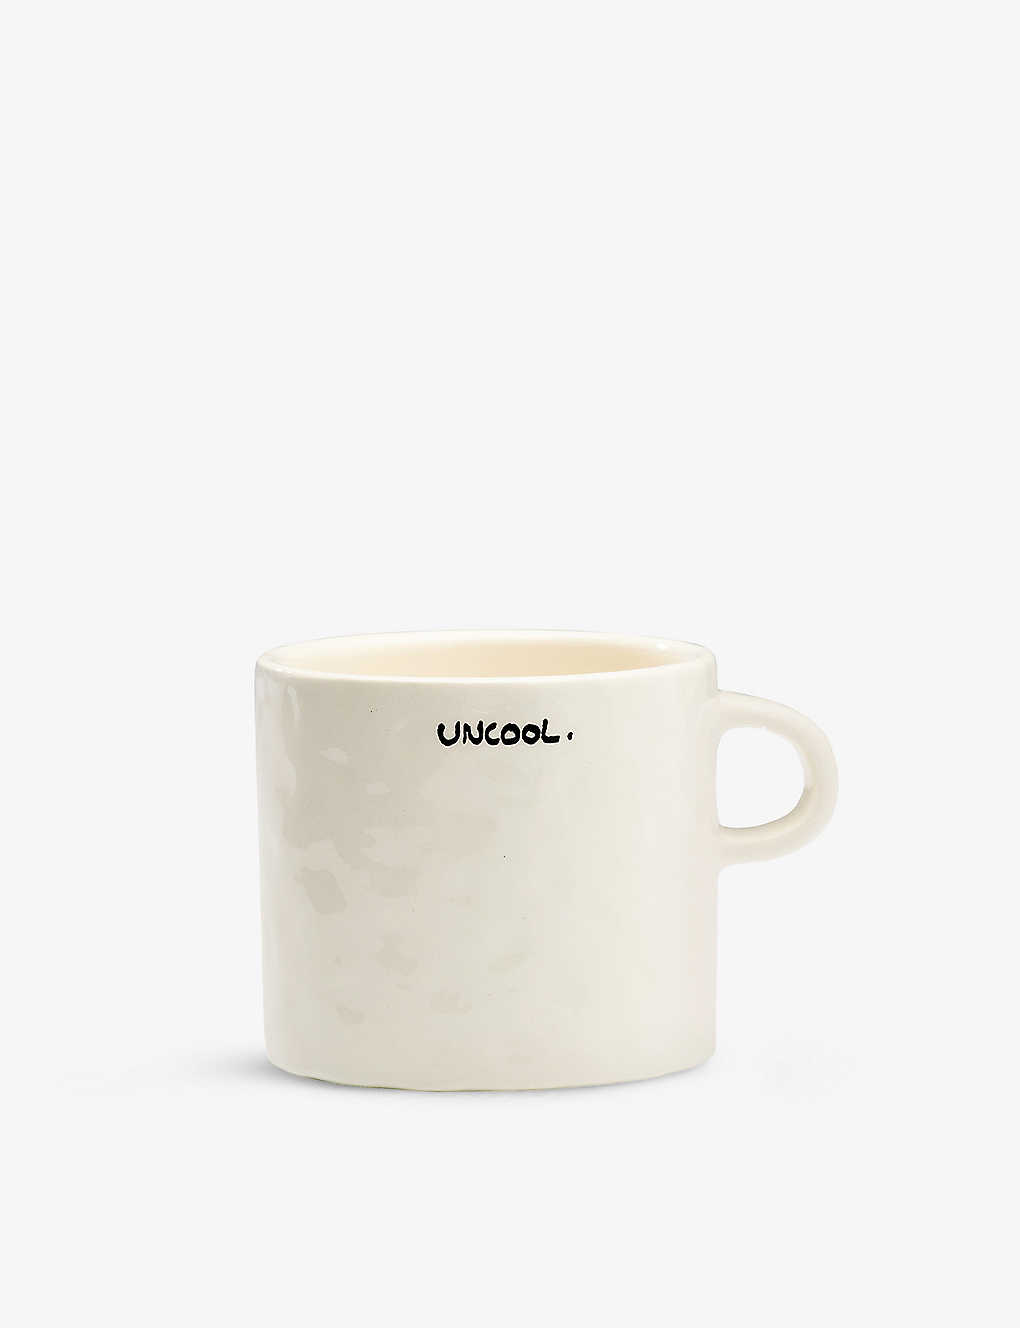 Anna + Nina Uncool Ceramic Mug 10.3cm